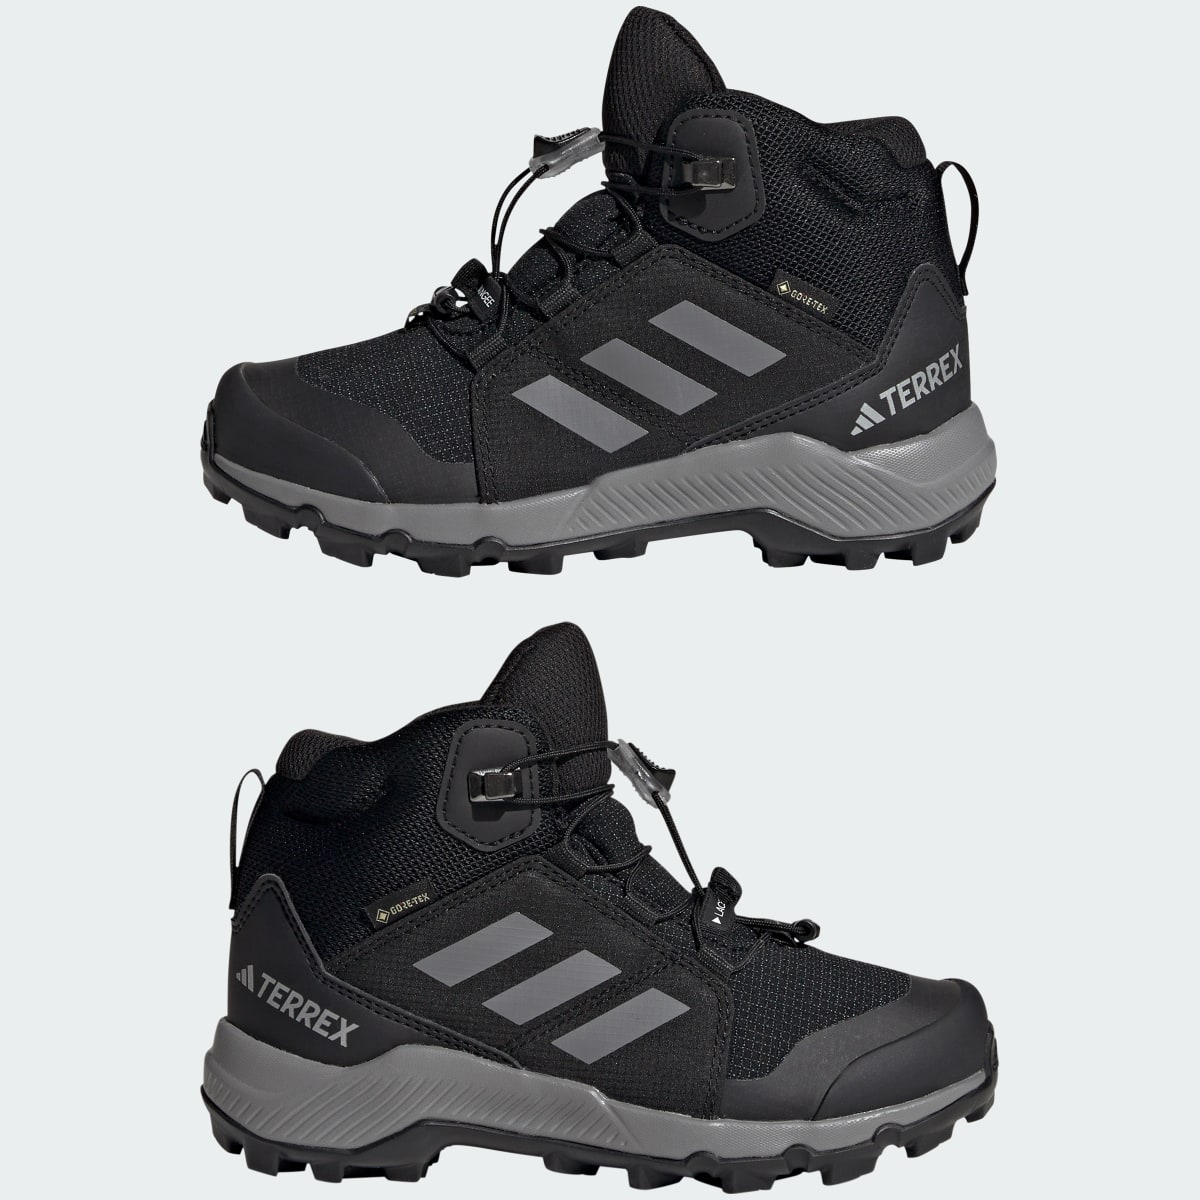 Adidas Terrex Mid GORE-TEX Hiking Shoes. 9